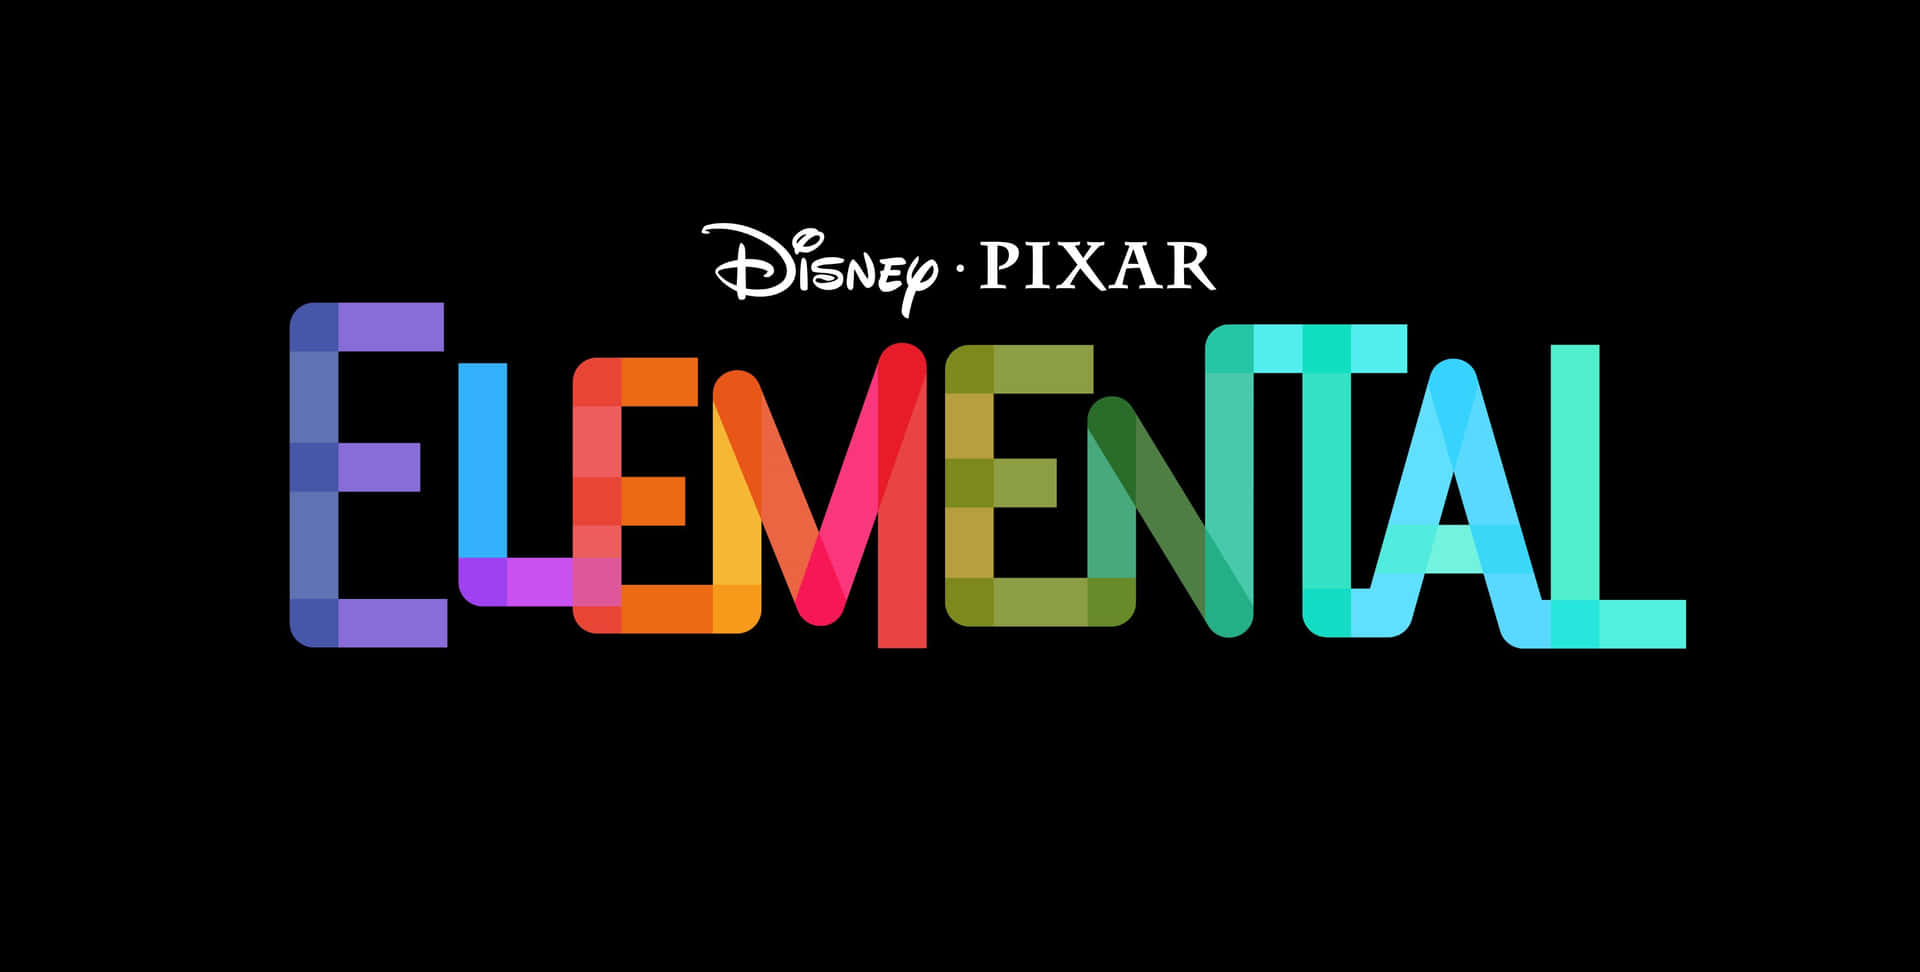 Disney Pixar Elemental Logo Wallpaper